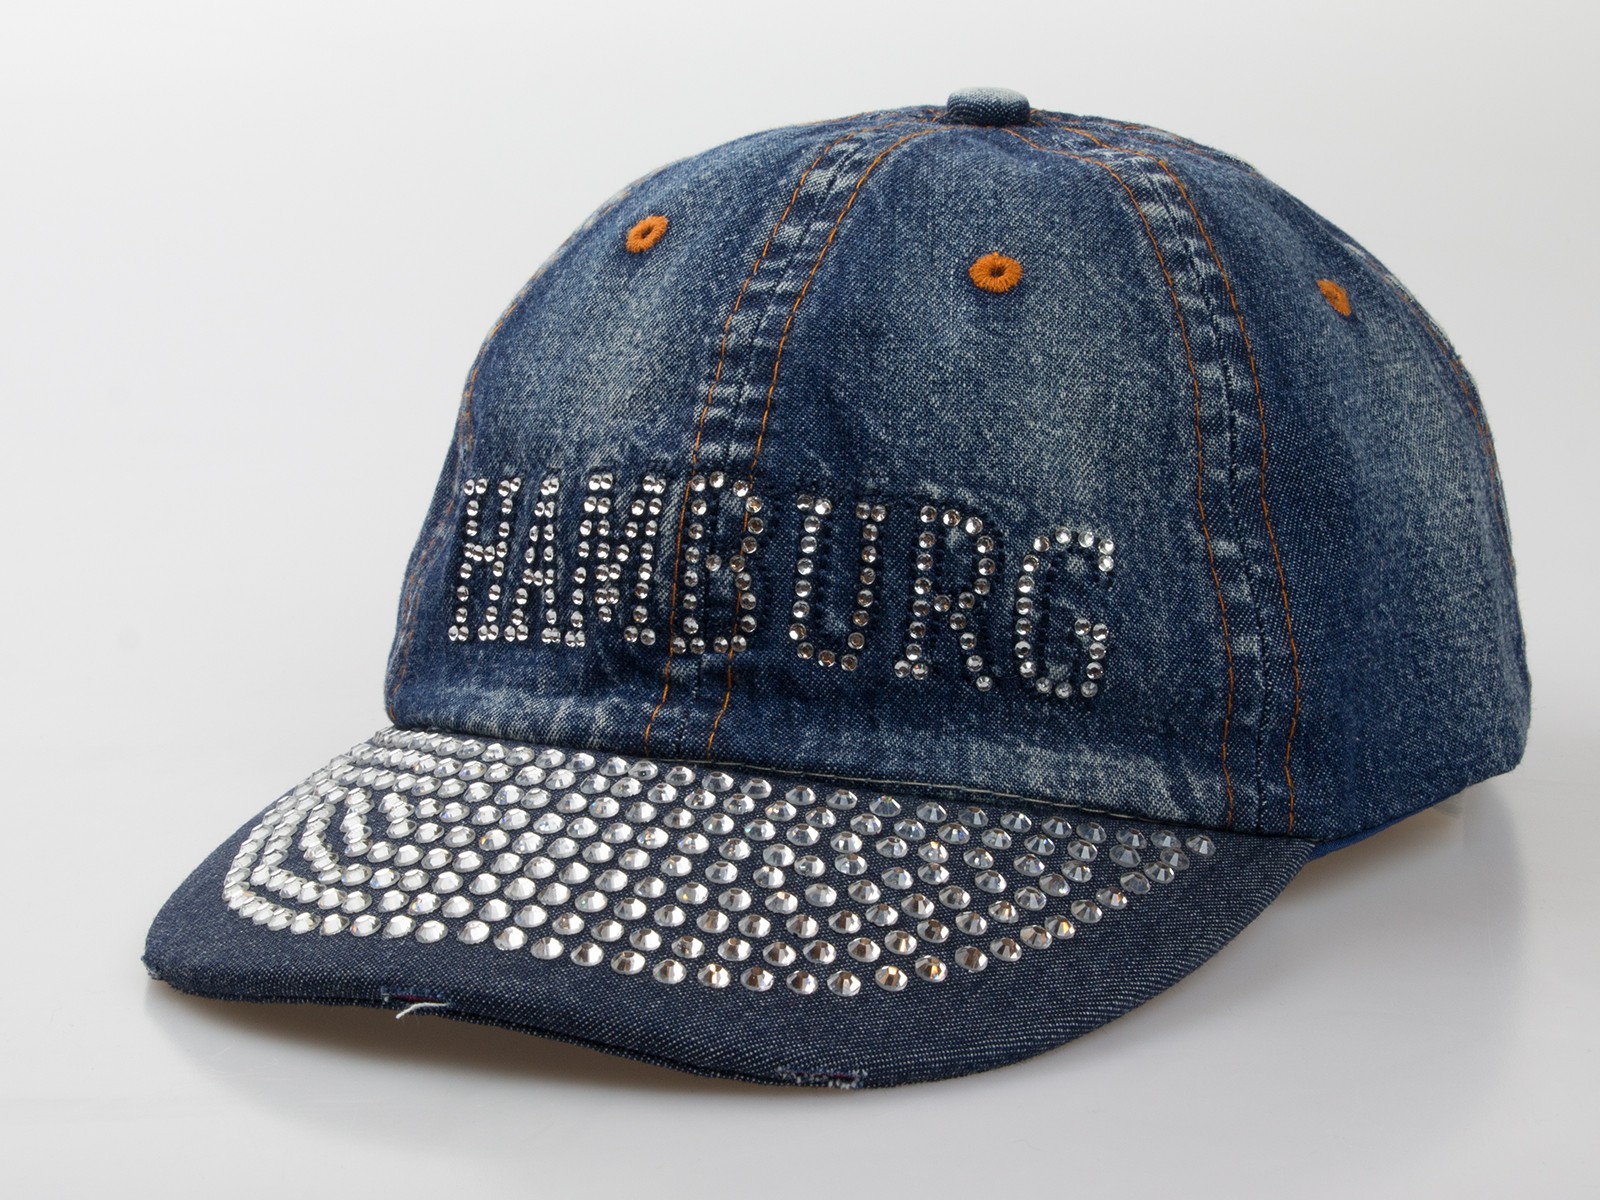 Baseball-Cap "Hamburg"  Strass